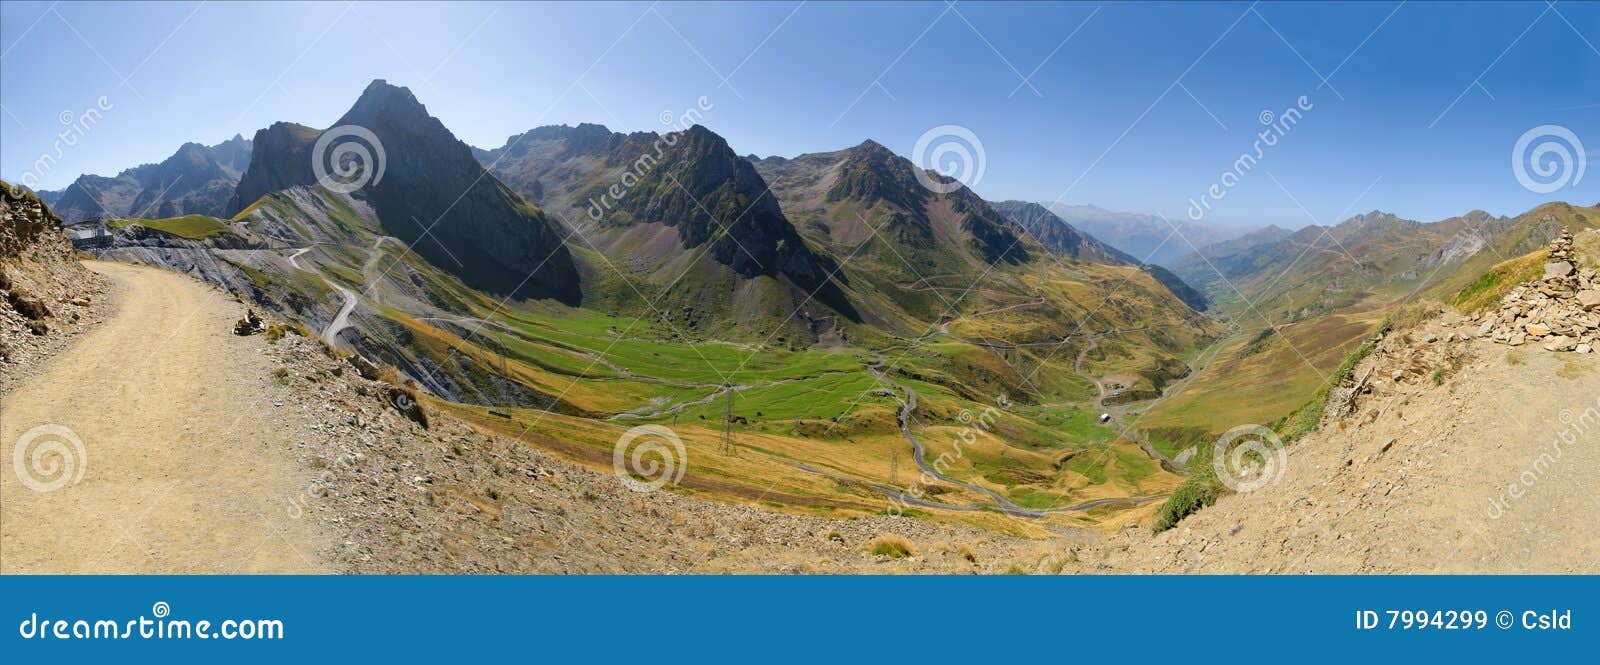 53 mpx mountain panorama, col du tourmalet